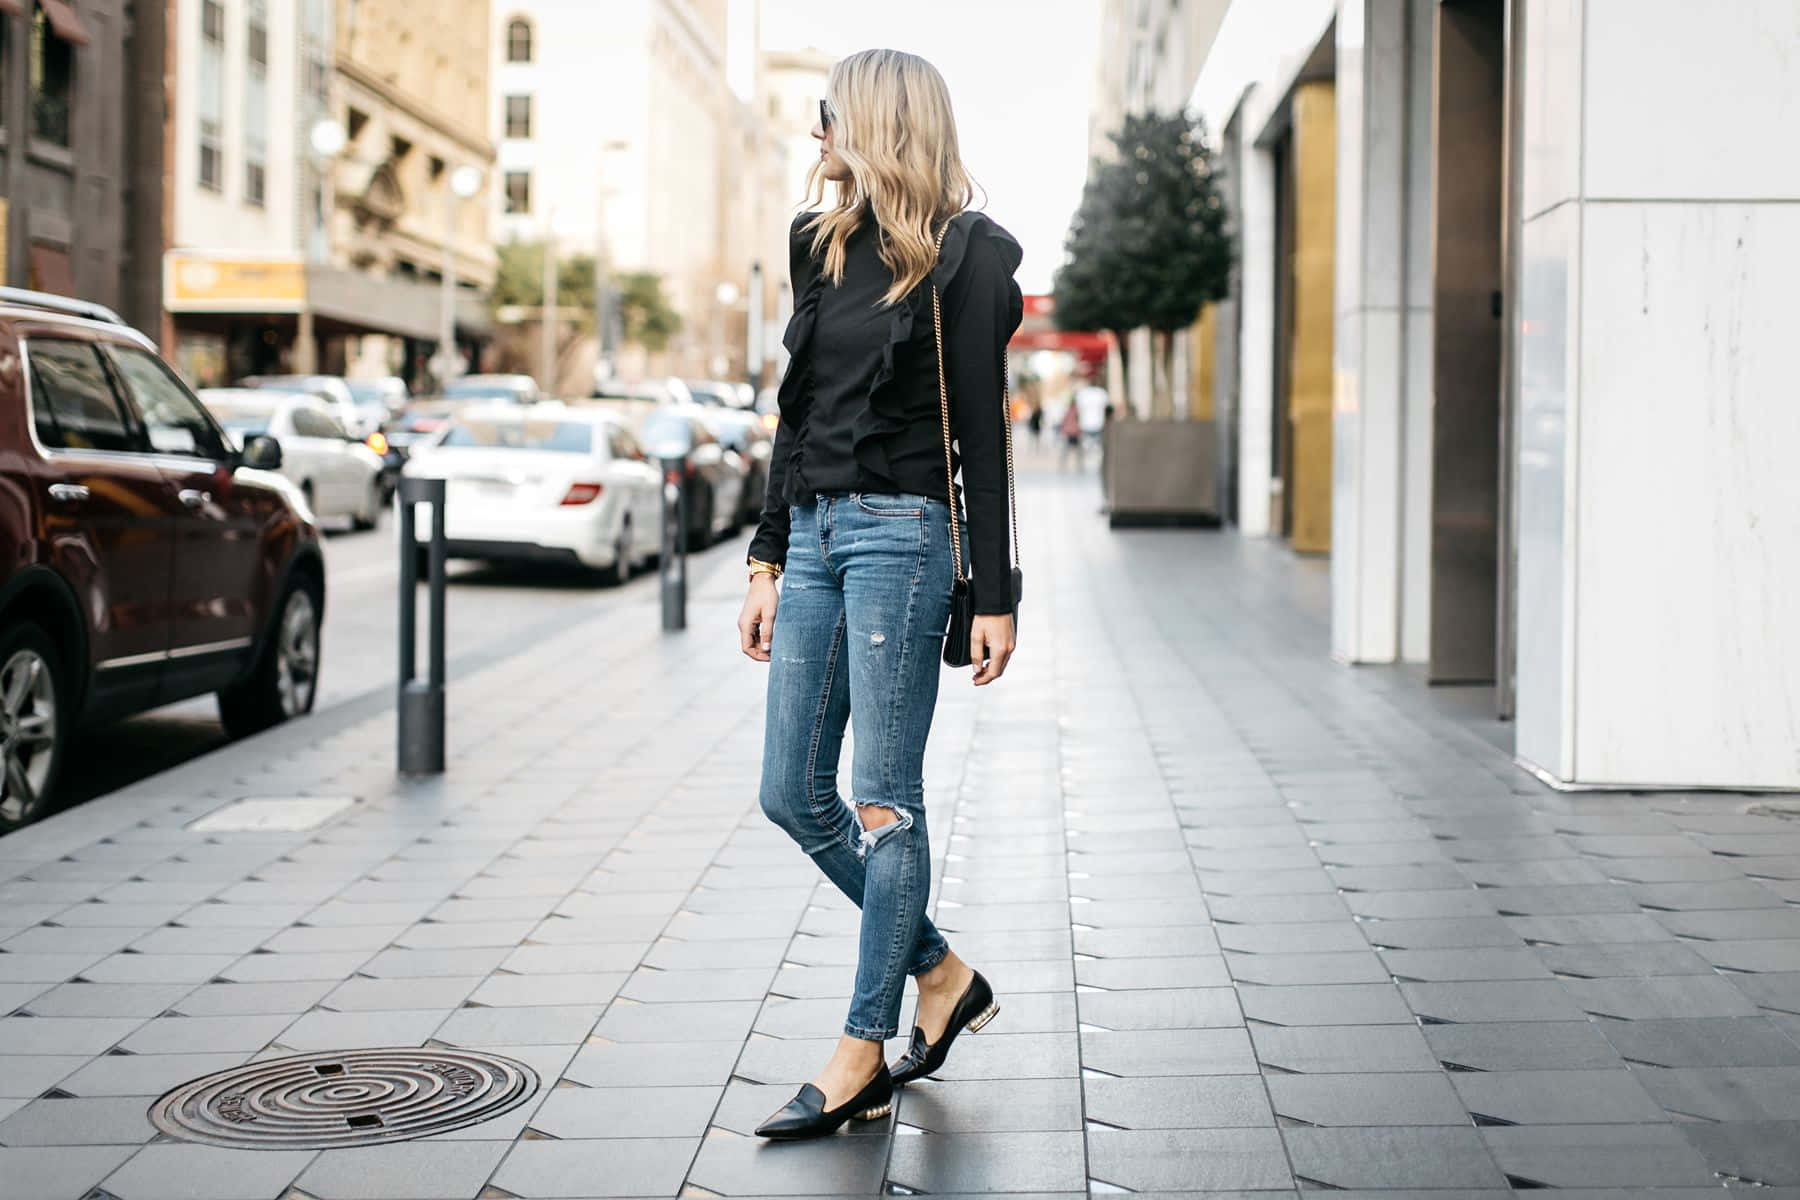 Woman On Sidewalk With Nicholas Kirkwood Shoes Wallpaper